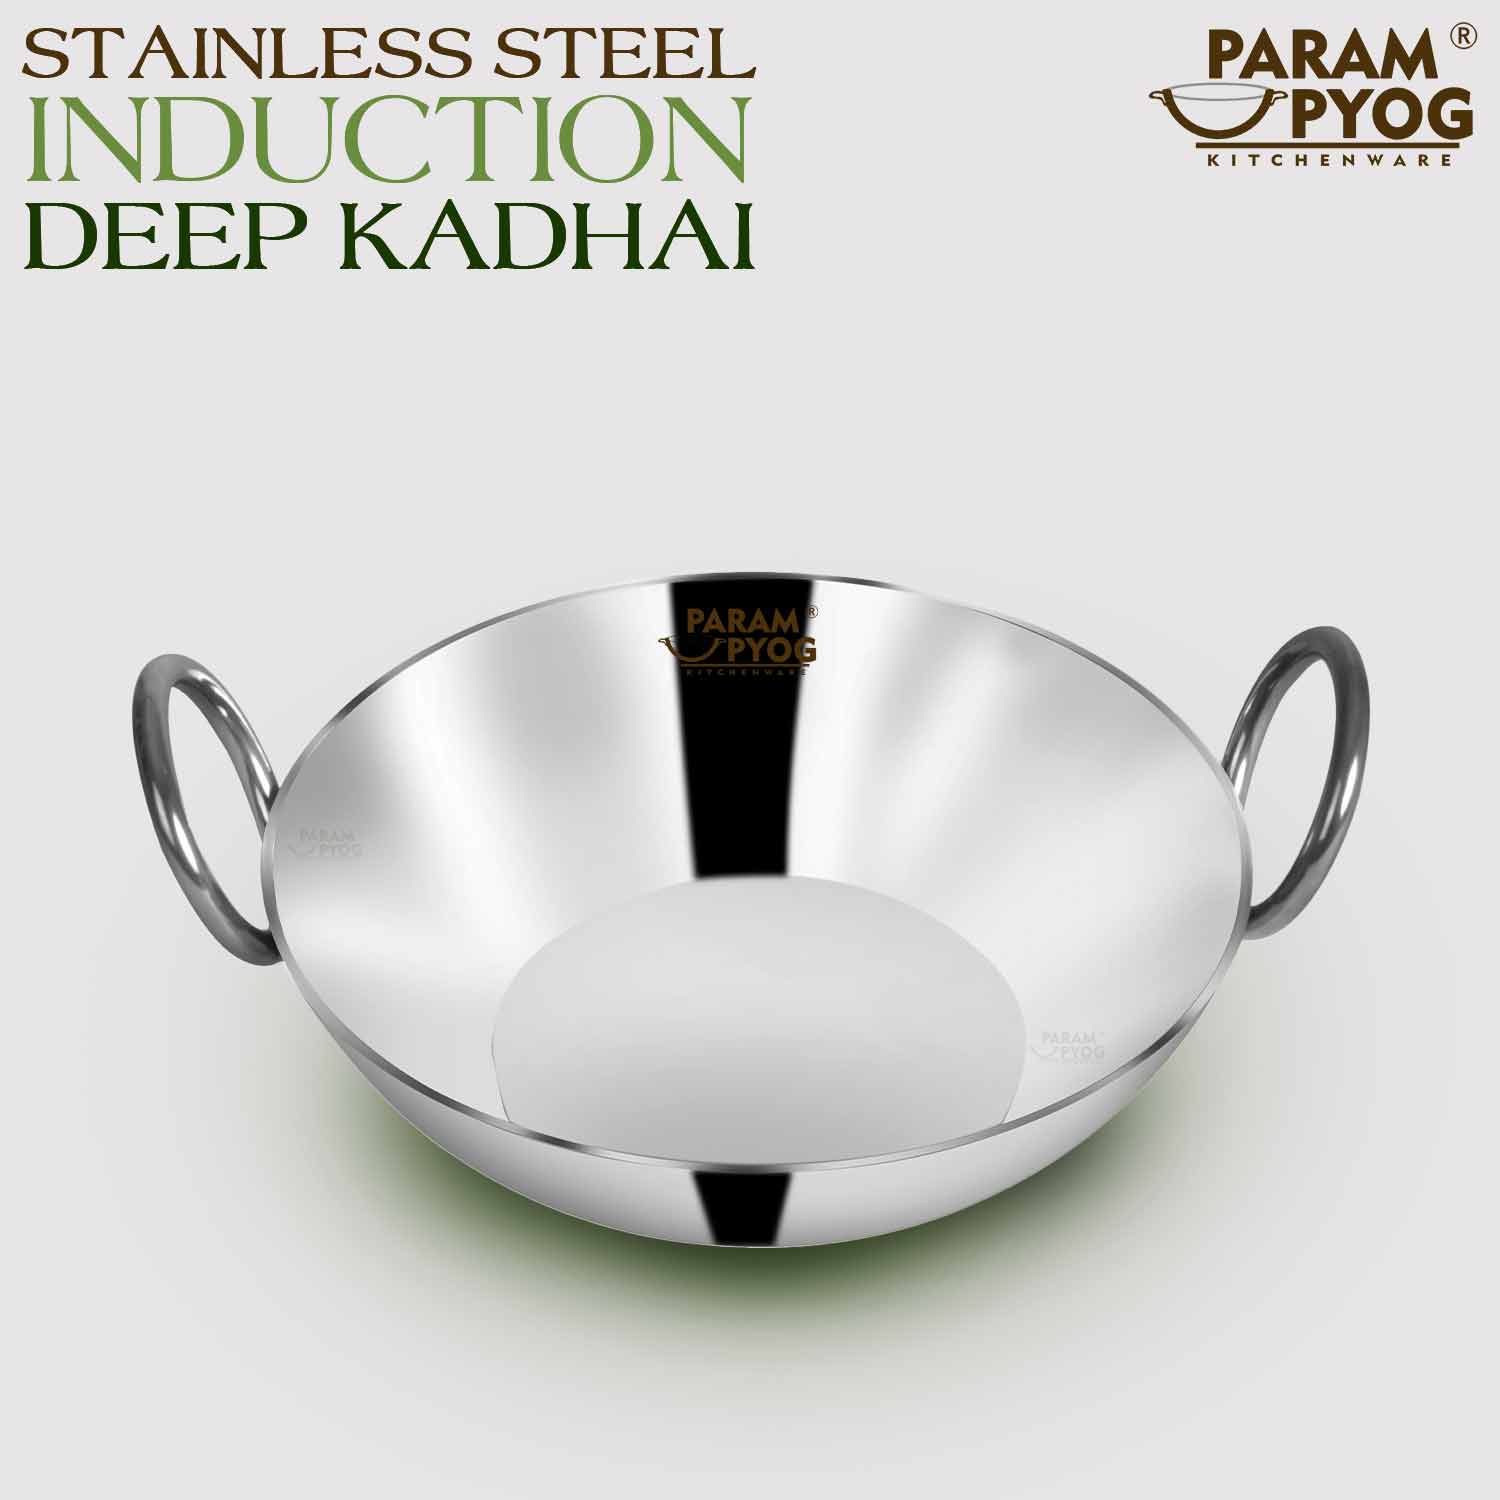 Best brass and stainless steel utensils, Param Upyog Kitchenware